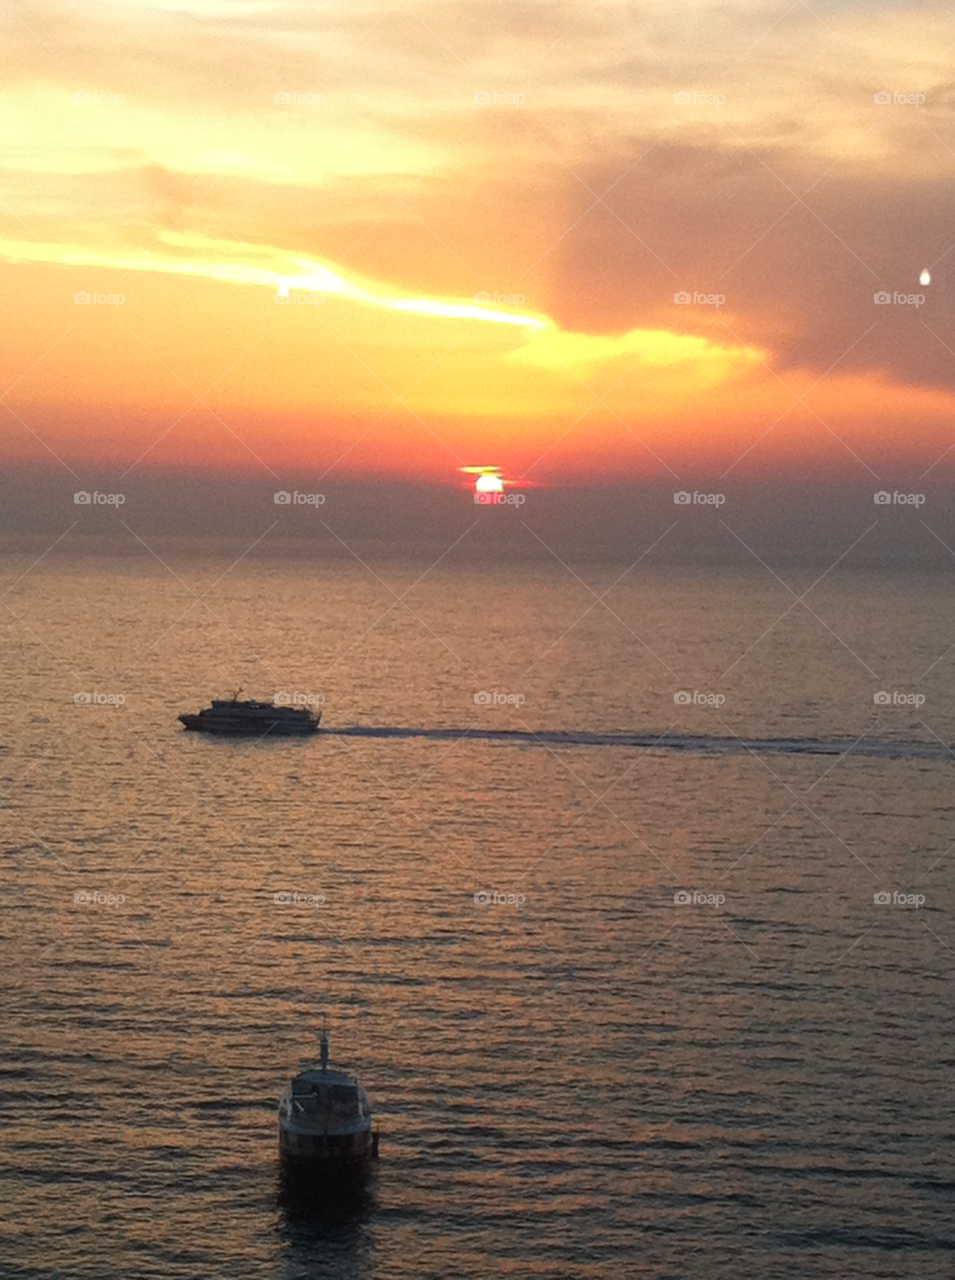 italy sunset sea boat by bobmca1